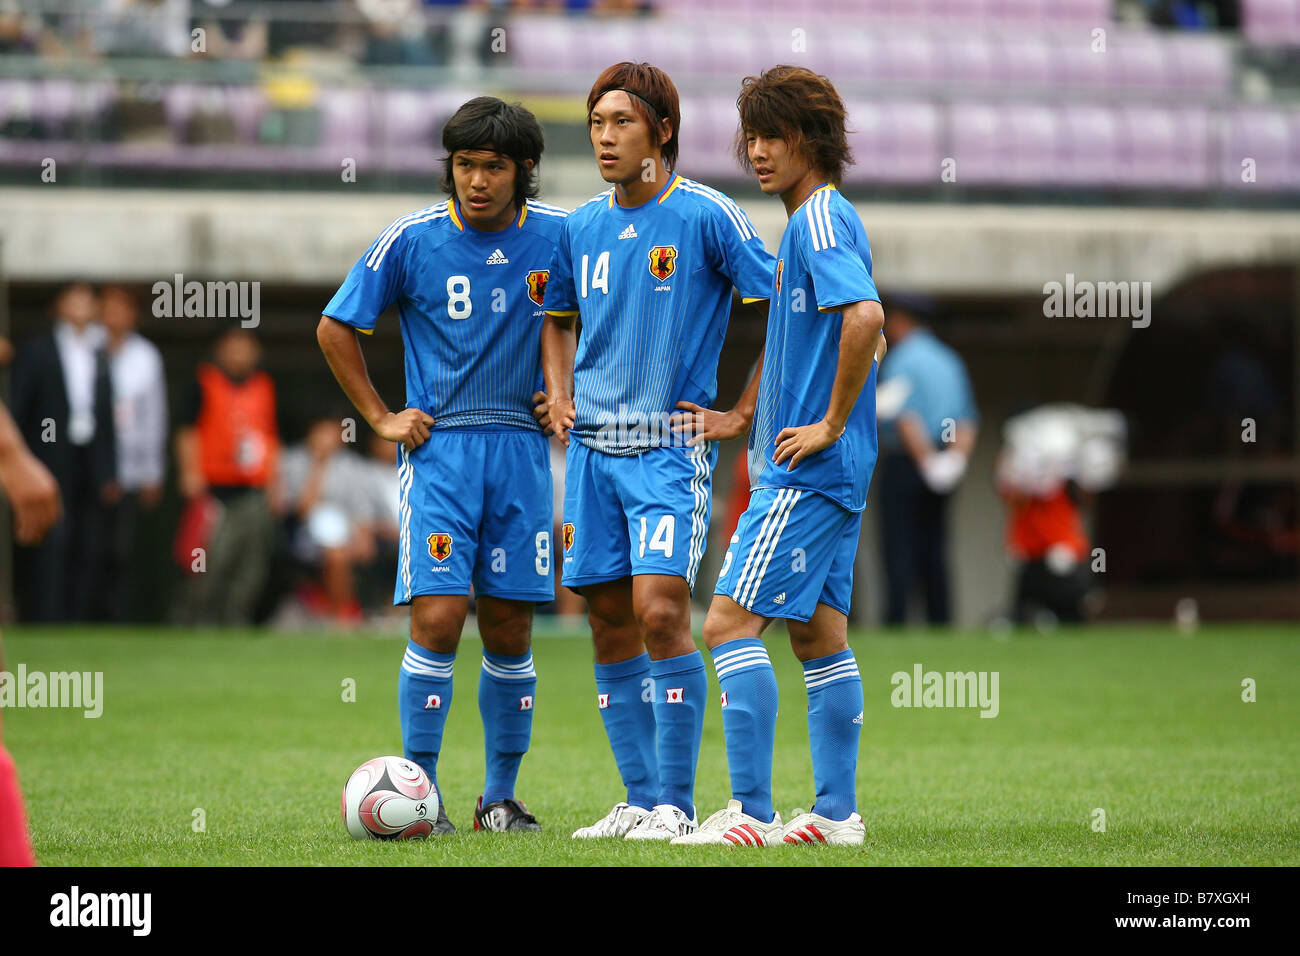 L a R Jun Suzuki JPN Kosuke Yamamoto JPN Yoichiro Kakitani JPN Settembre 15 2008 Calcio Coppa di Sendai International Youth Footb Foto Stock